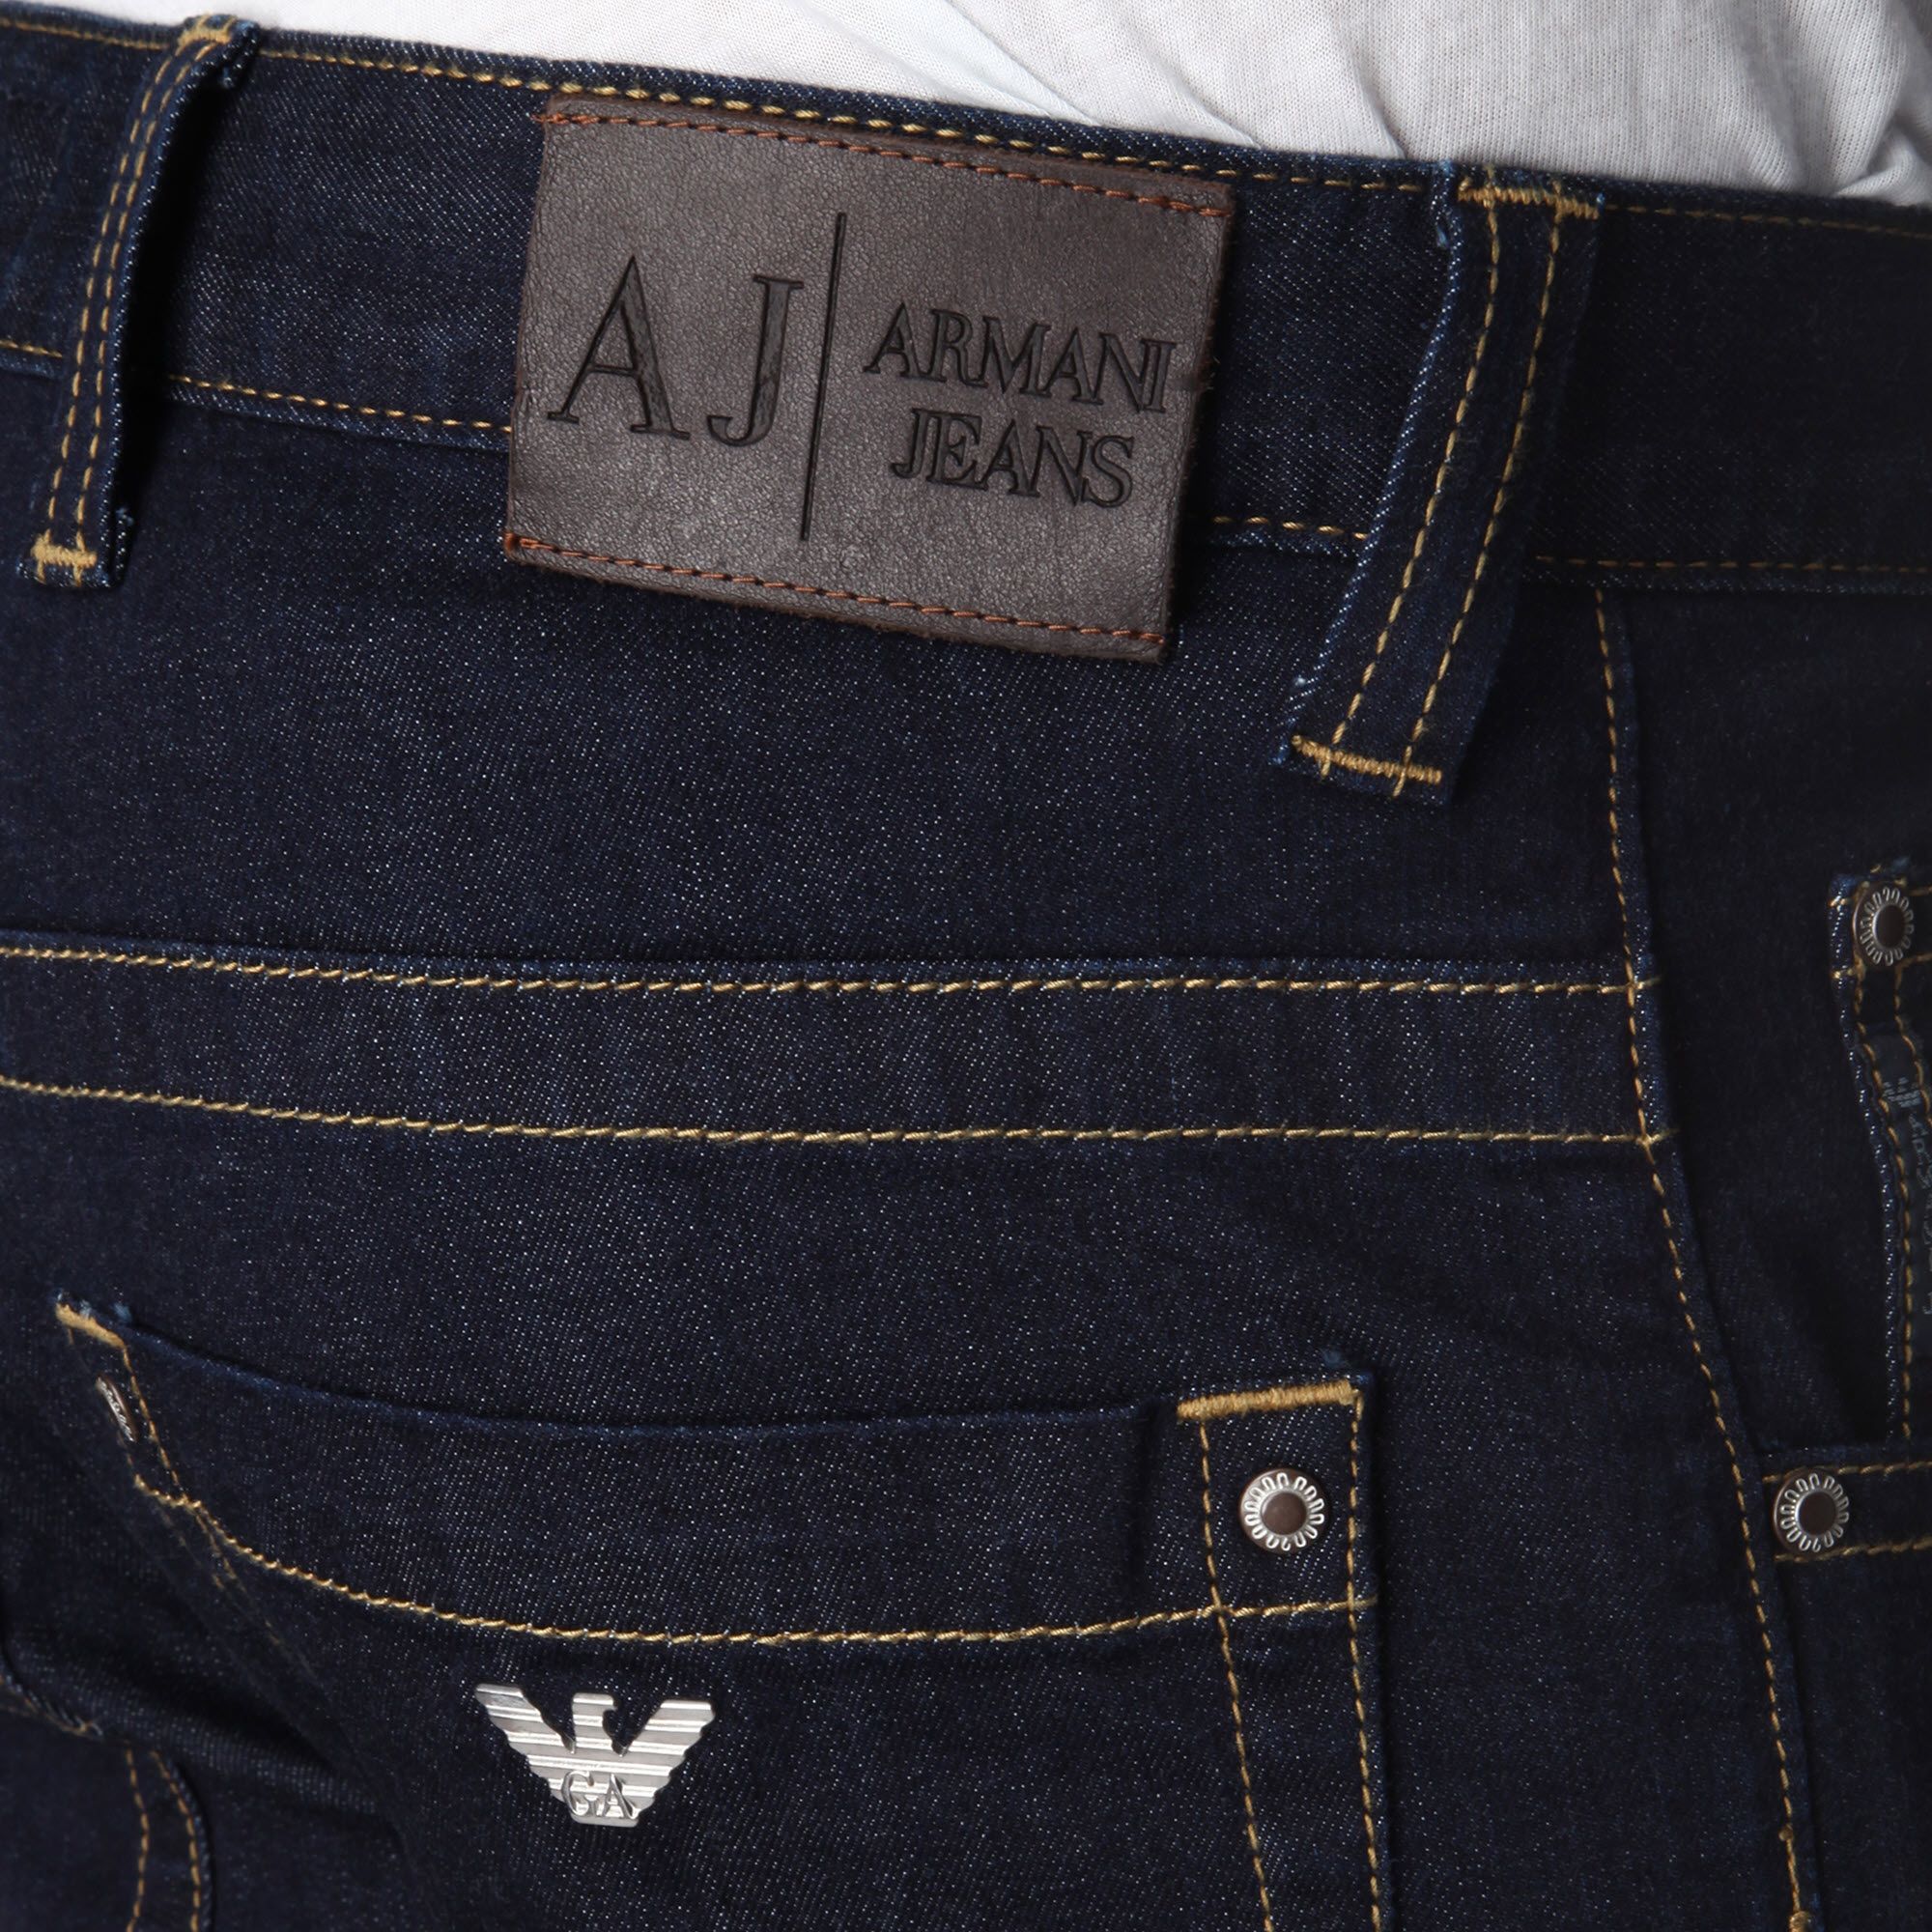 Armani Jeans J08 Slimfit Straight Jeans in Black for Men - Lyst